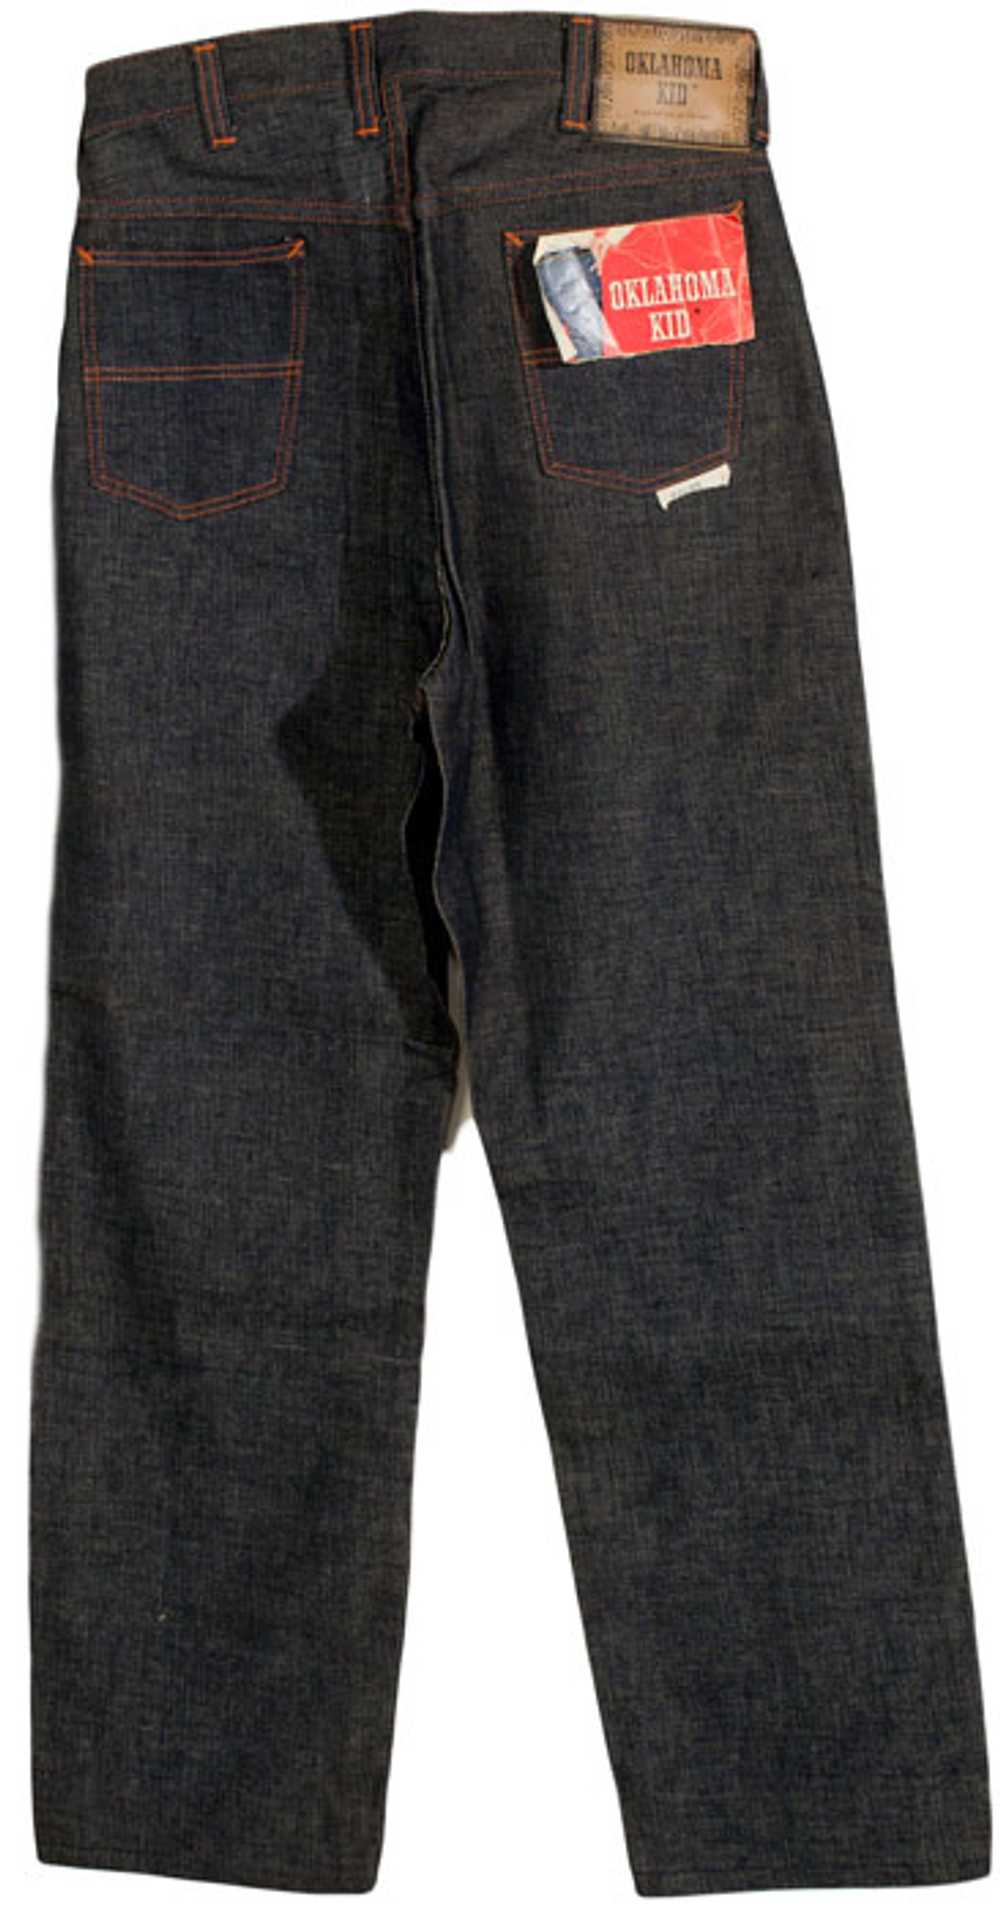 1950s Oklahoma Kid Brand Jeans - image 1